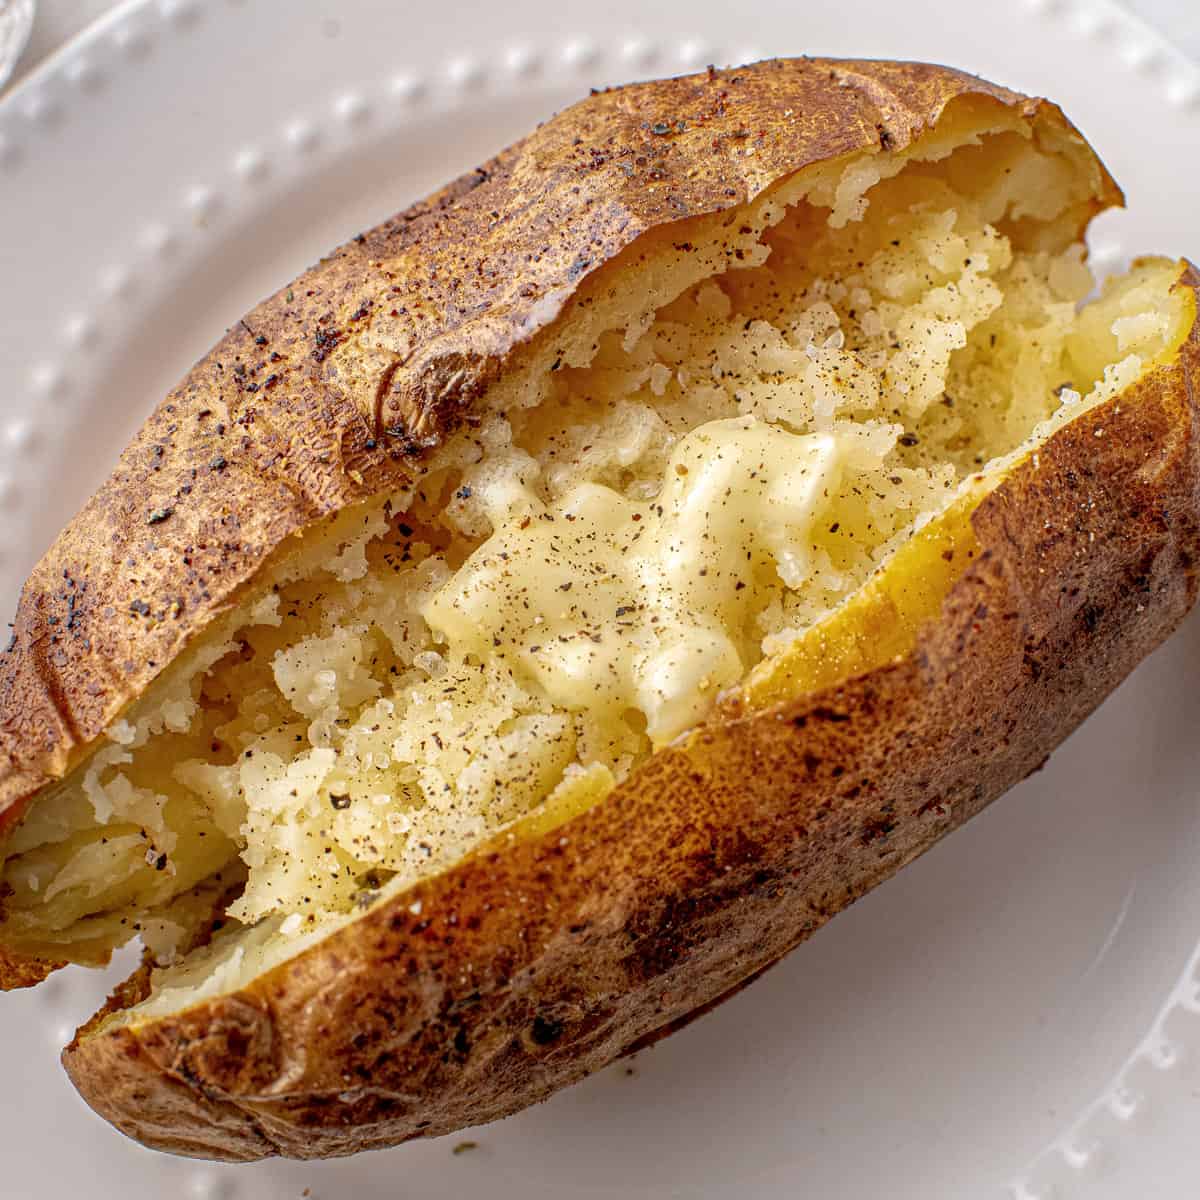 CRISPY Air Fryer Baked Potato - The Recipe Rebel